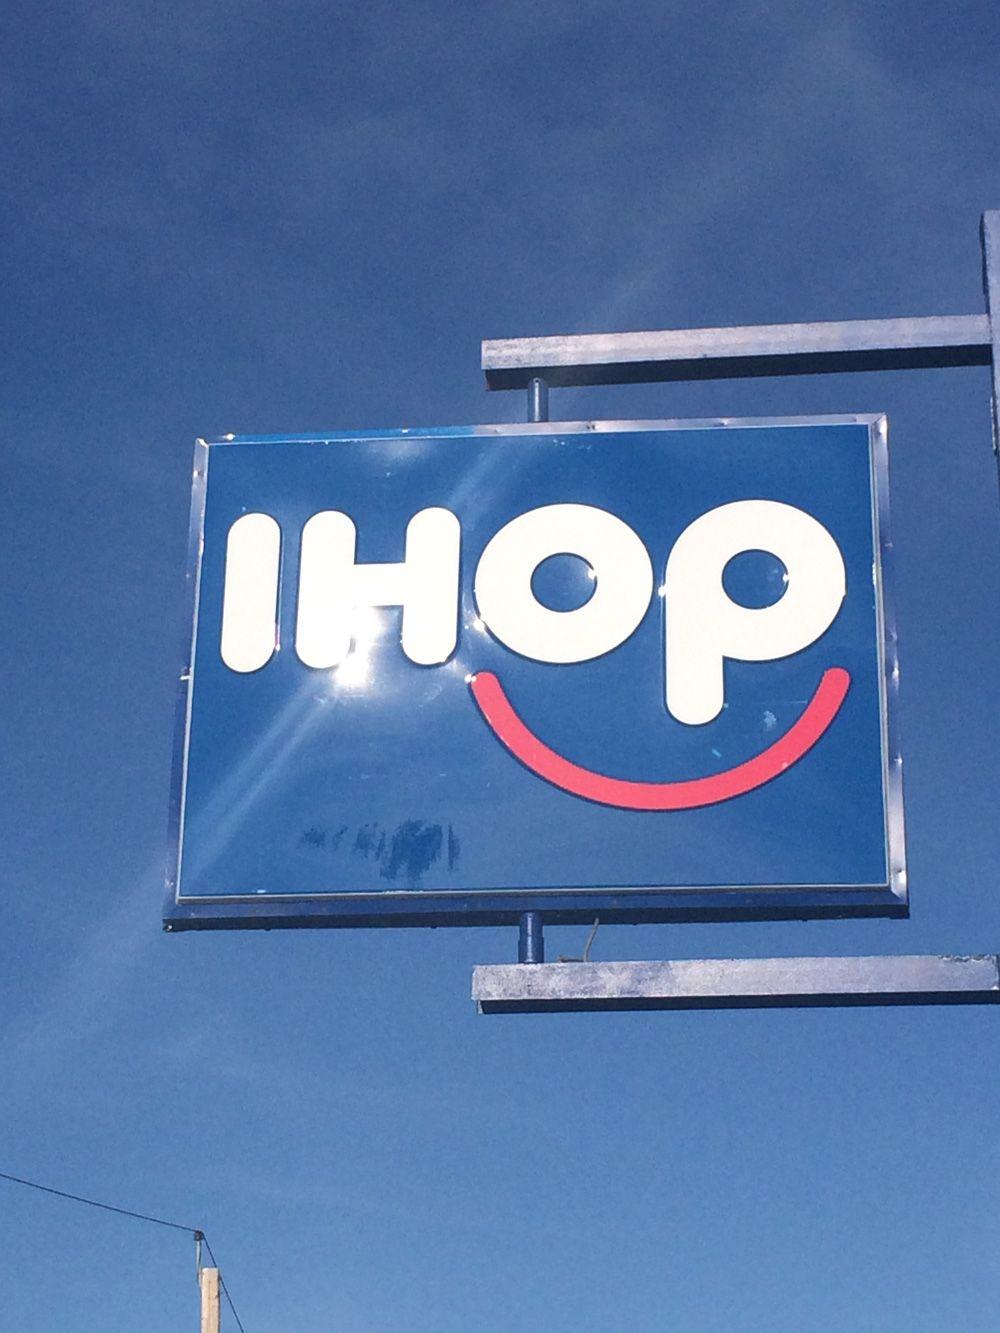 Ihop Logo - Brand New: New Logo for IHOP